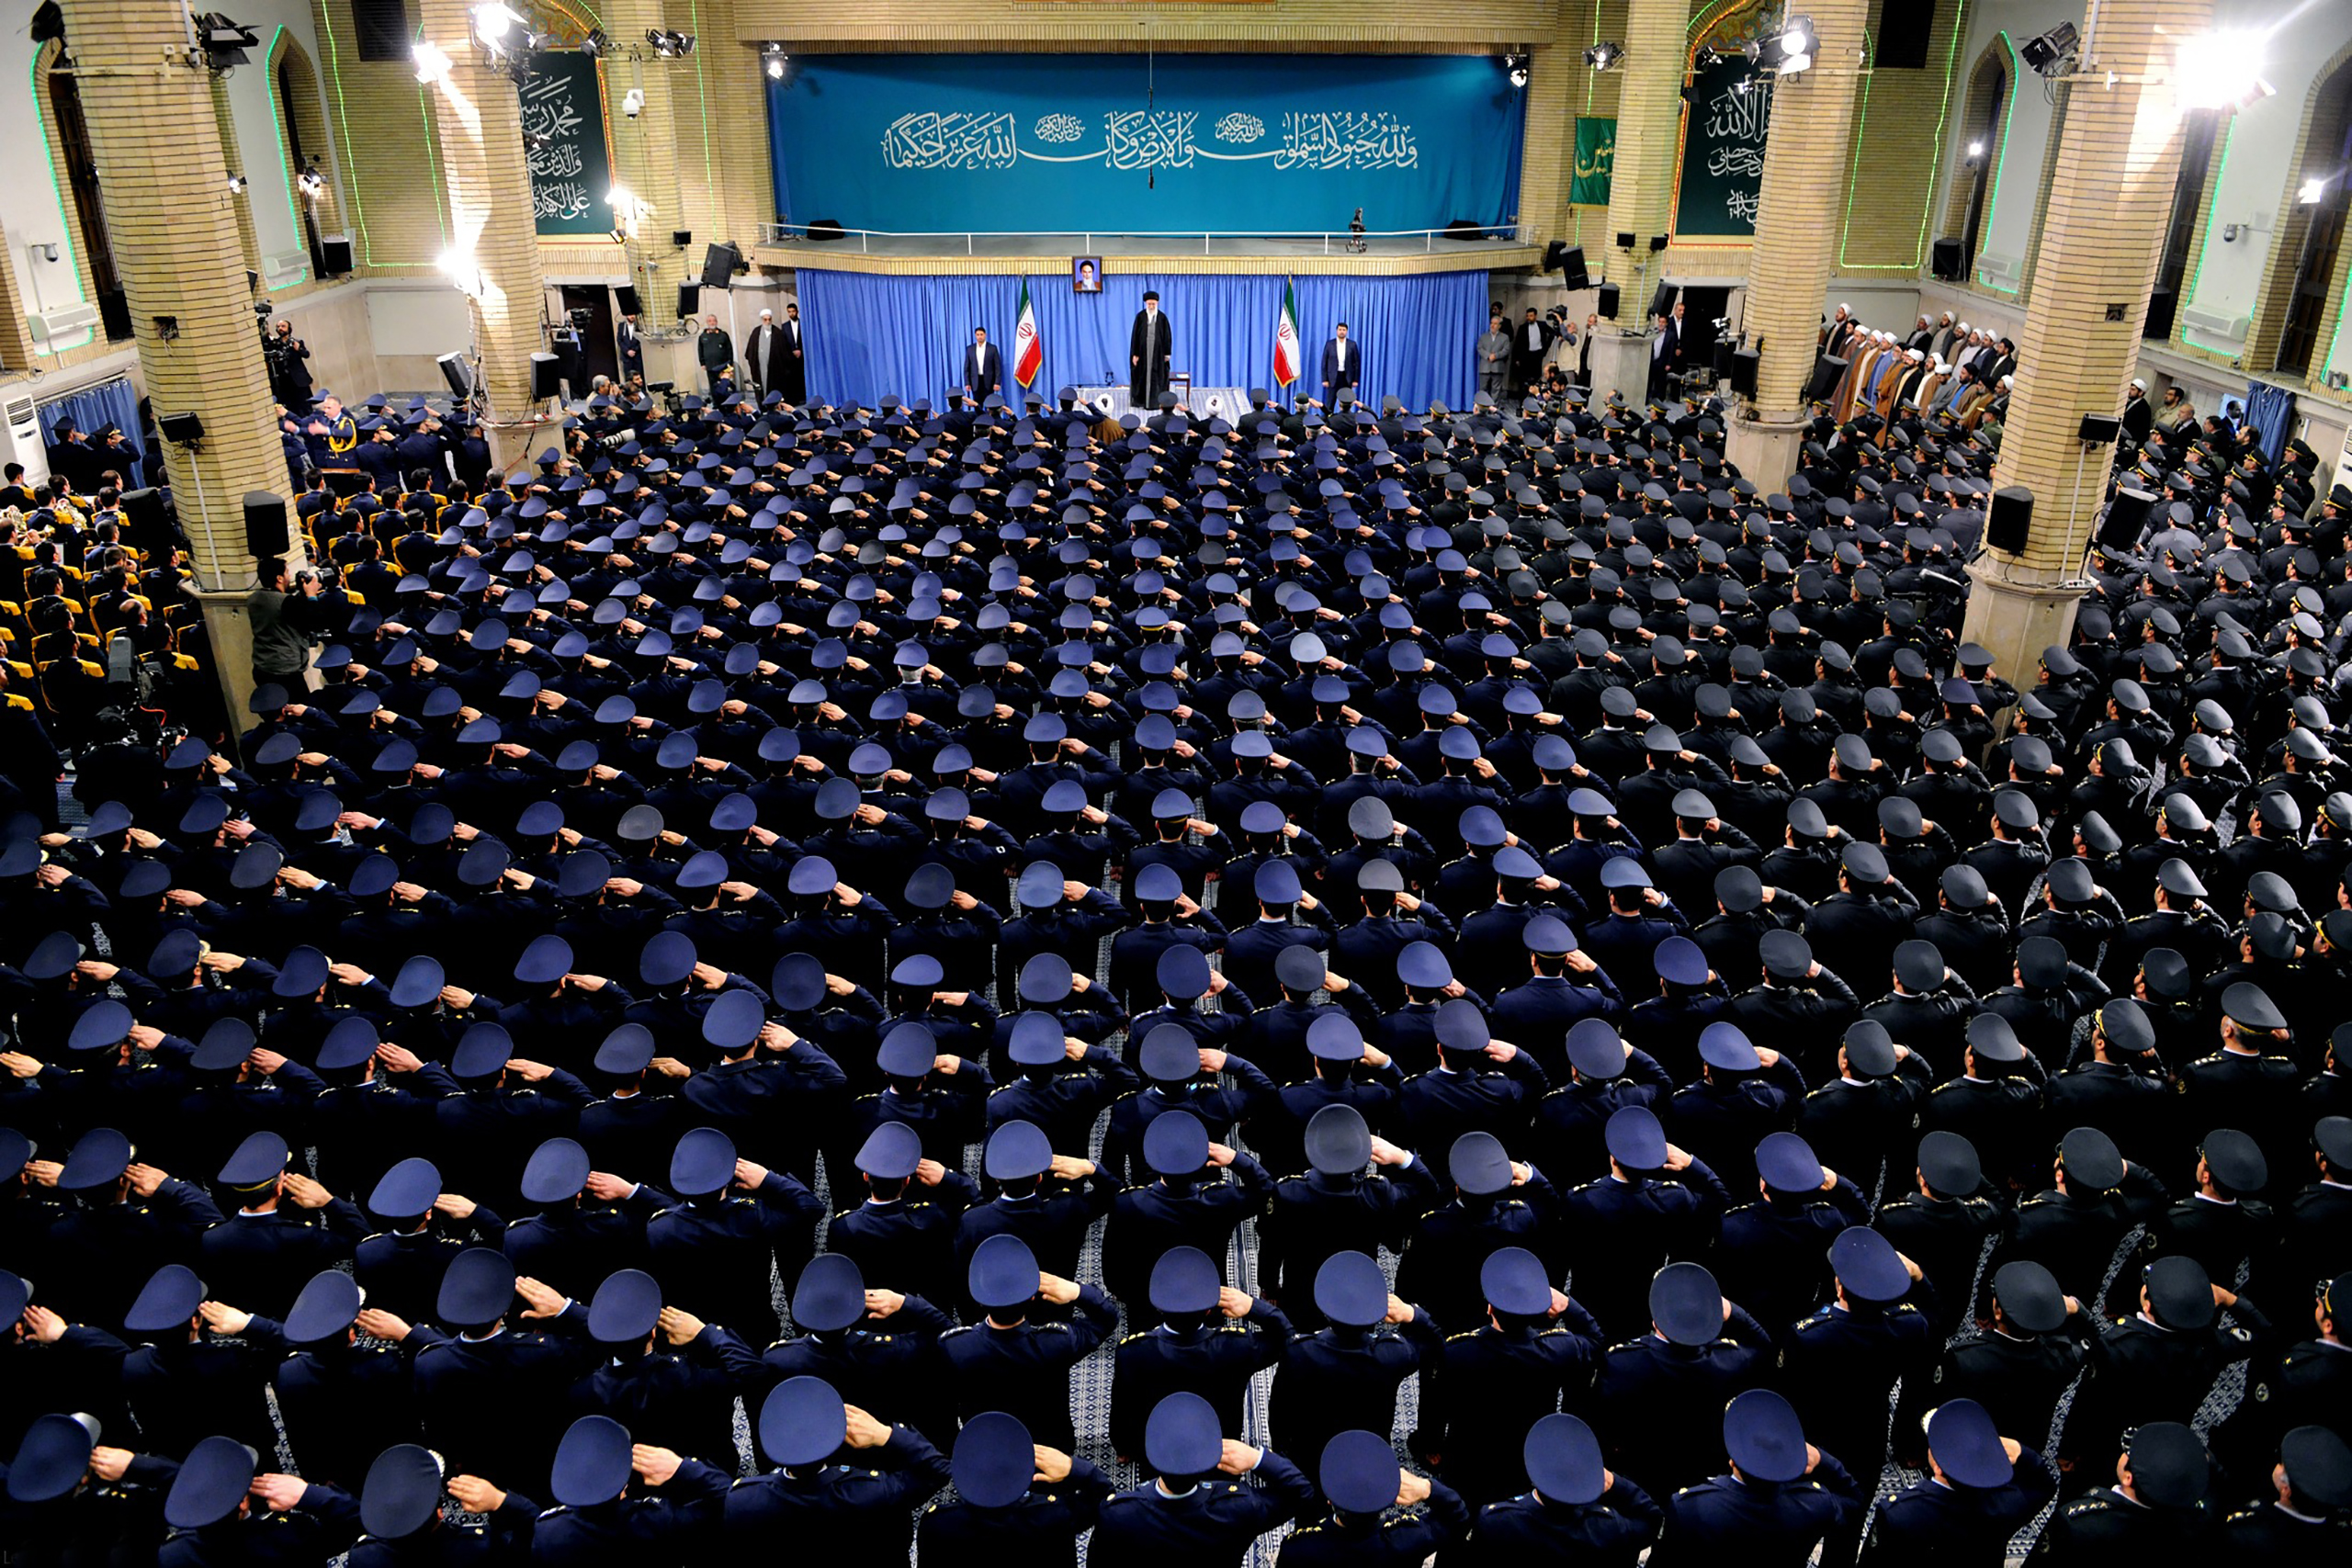 In a speech to the military, Ayatullah Khamenei said President Trump had shown America’s “real face” (SIPA/Newscom)